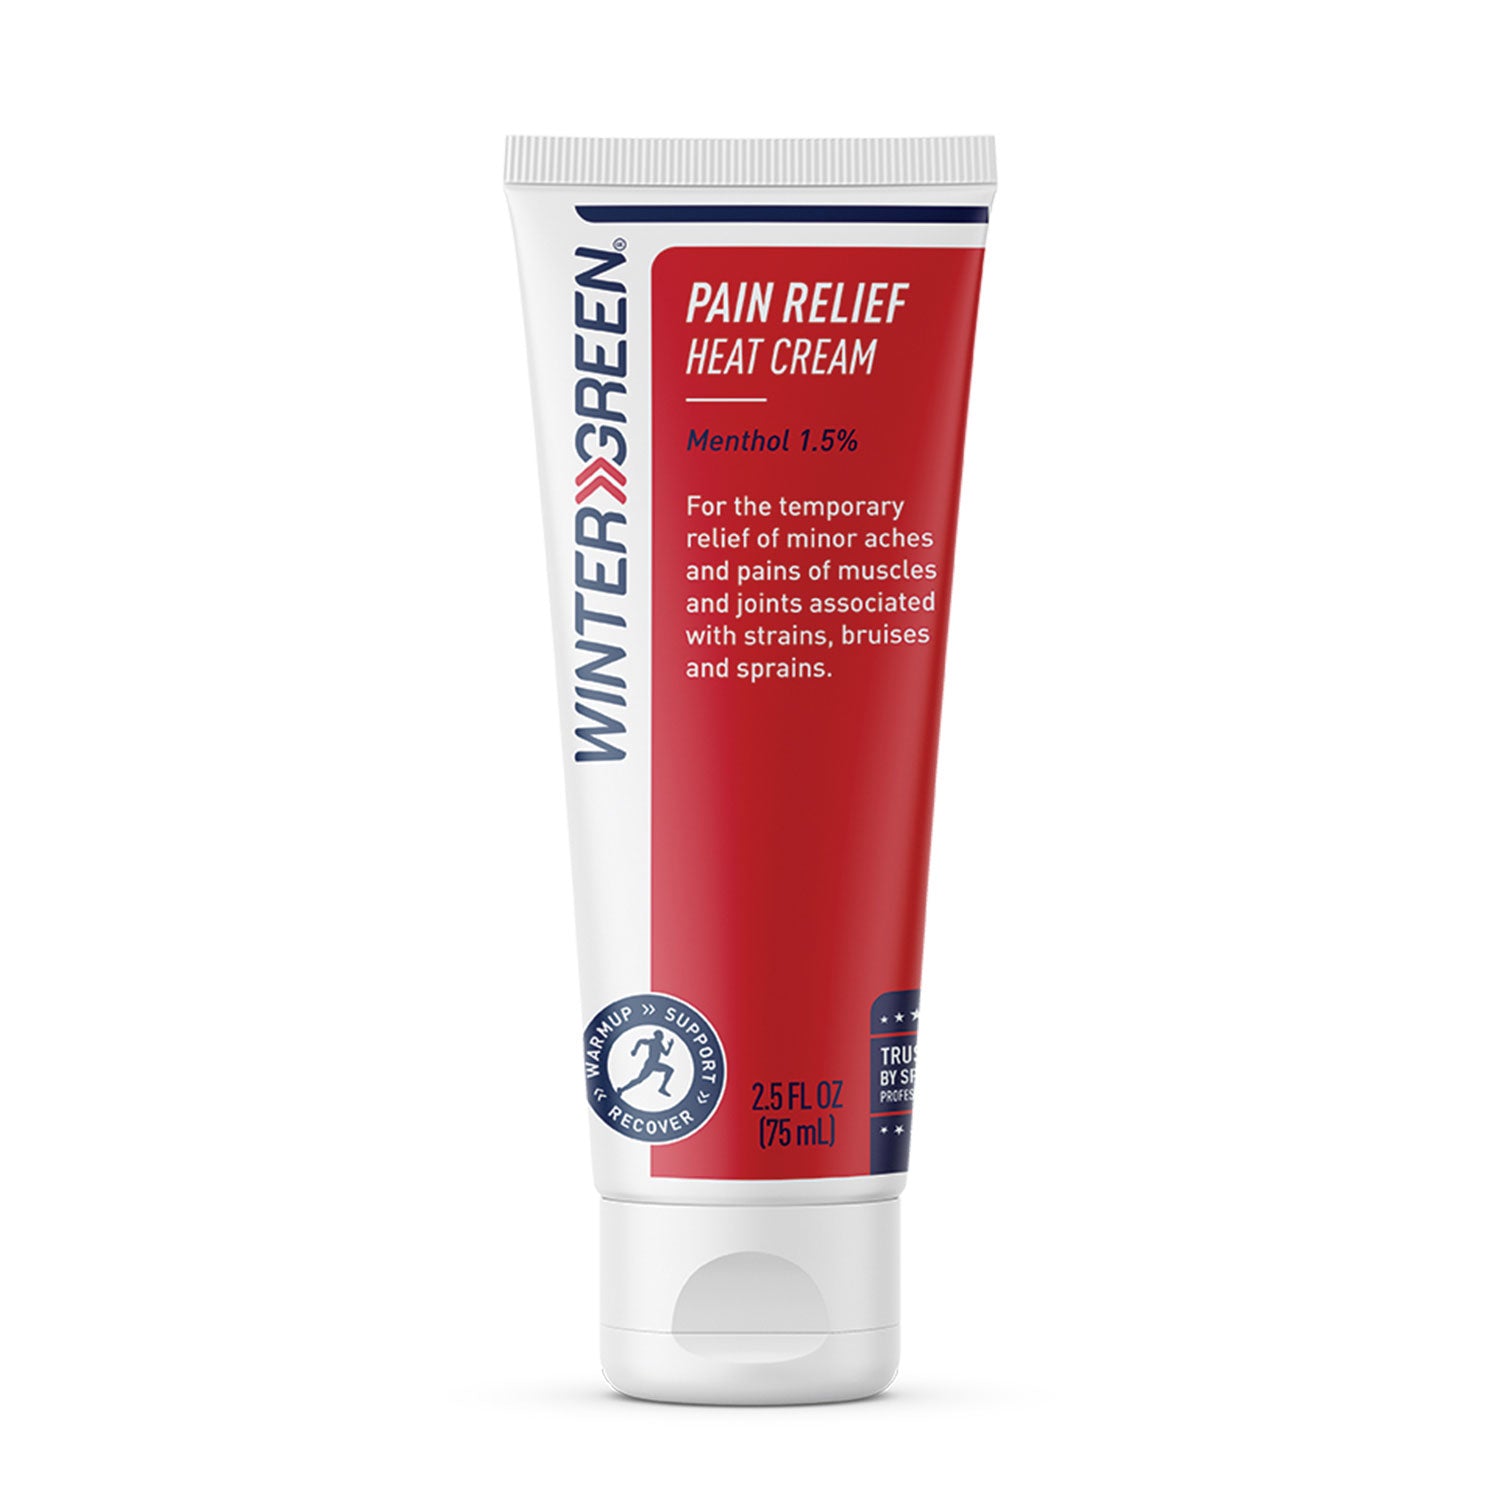 Pain Relief Heat Cream